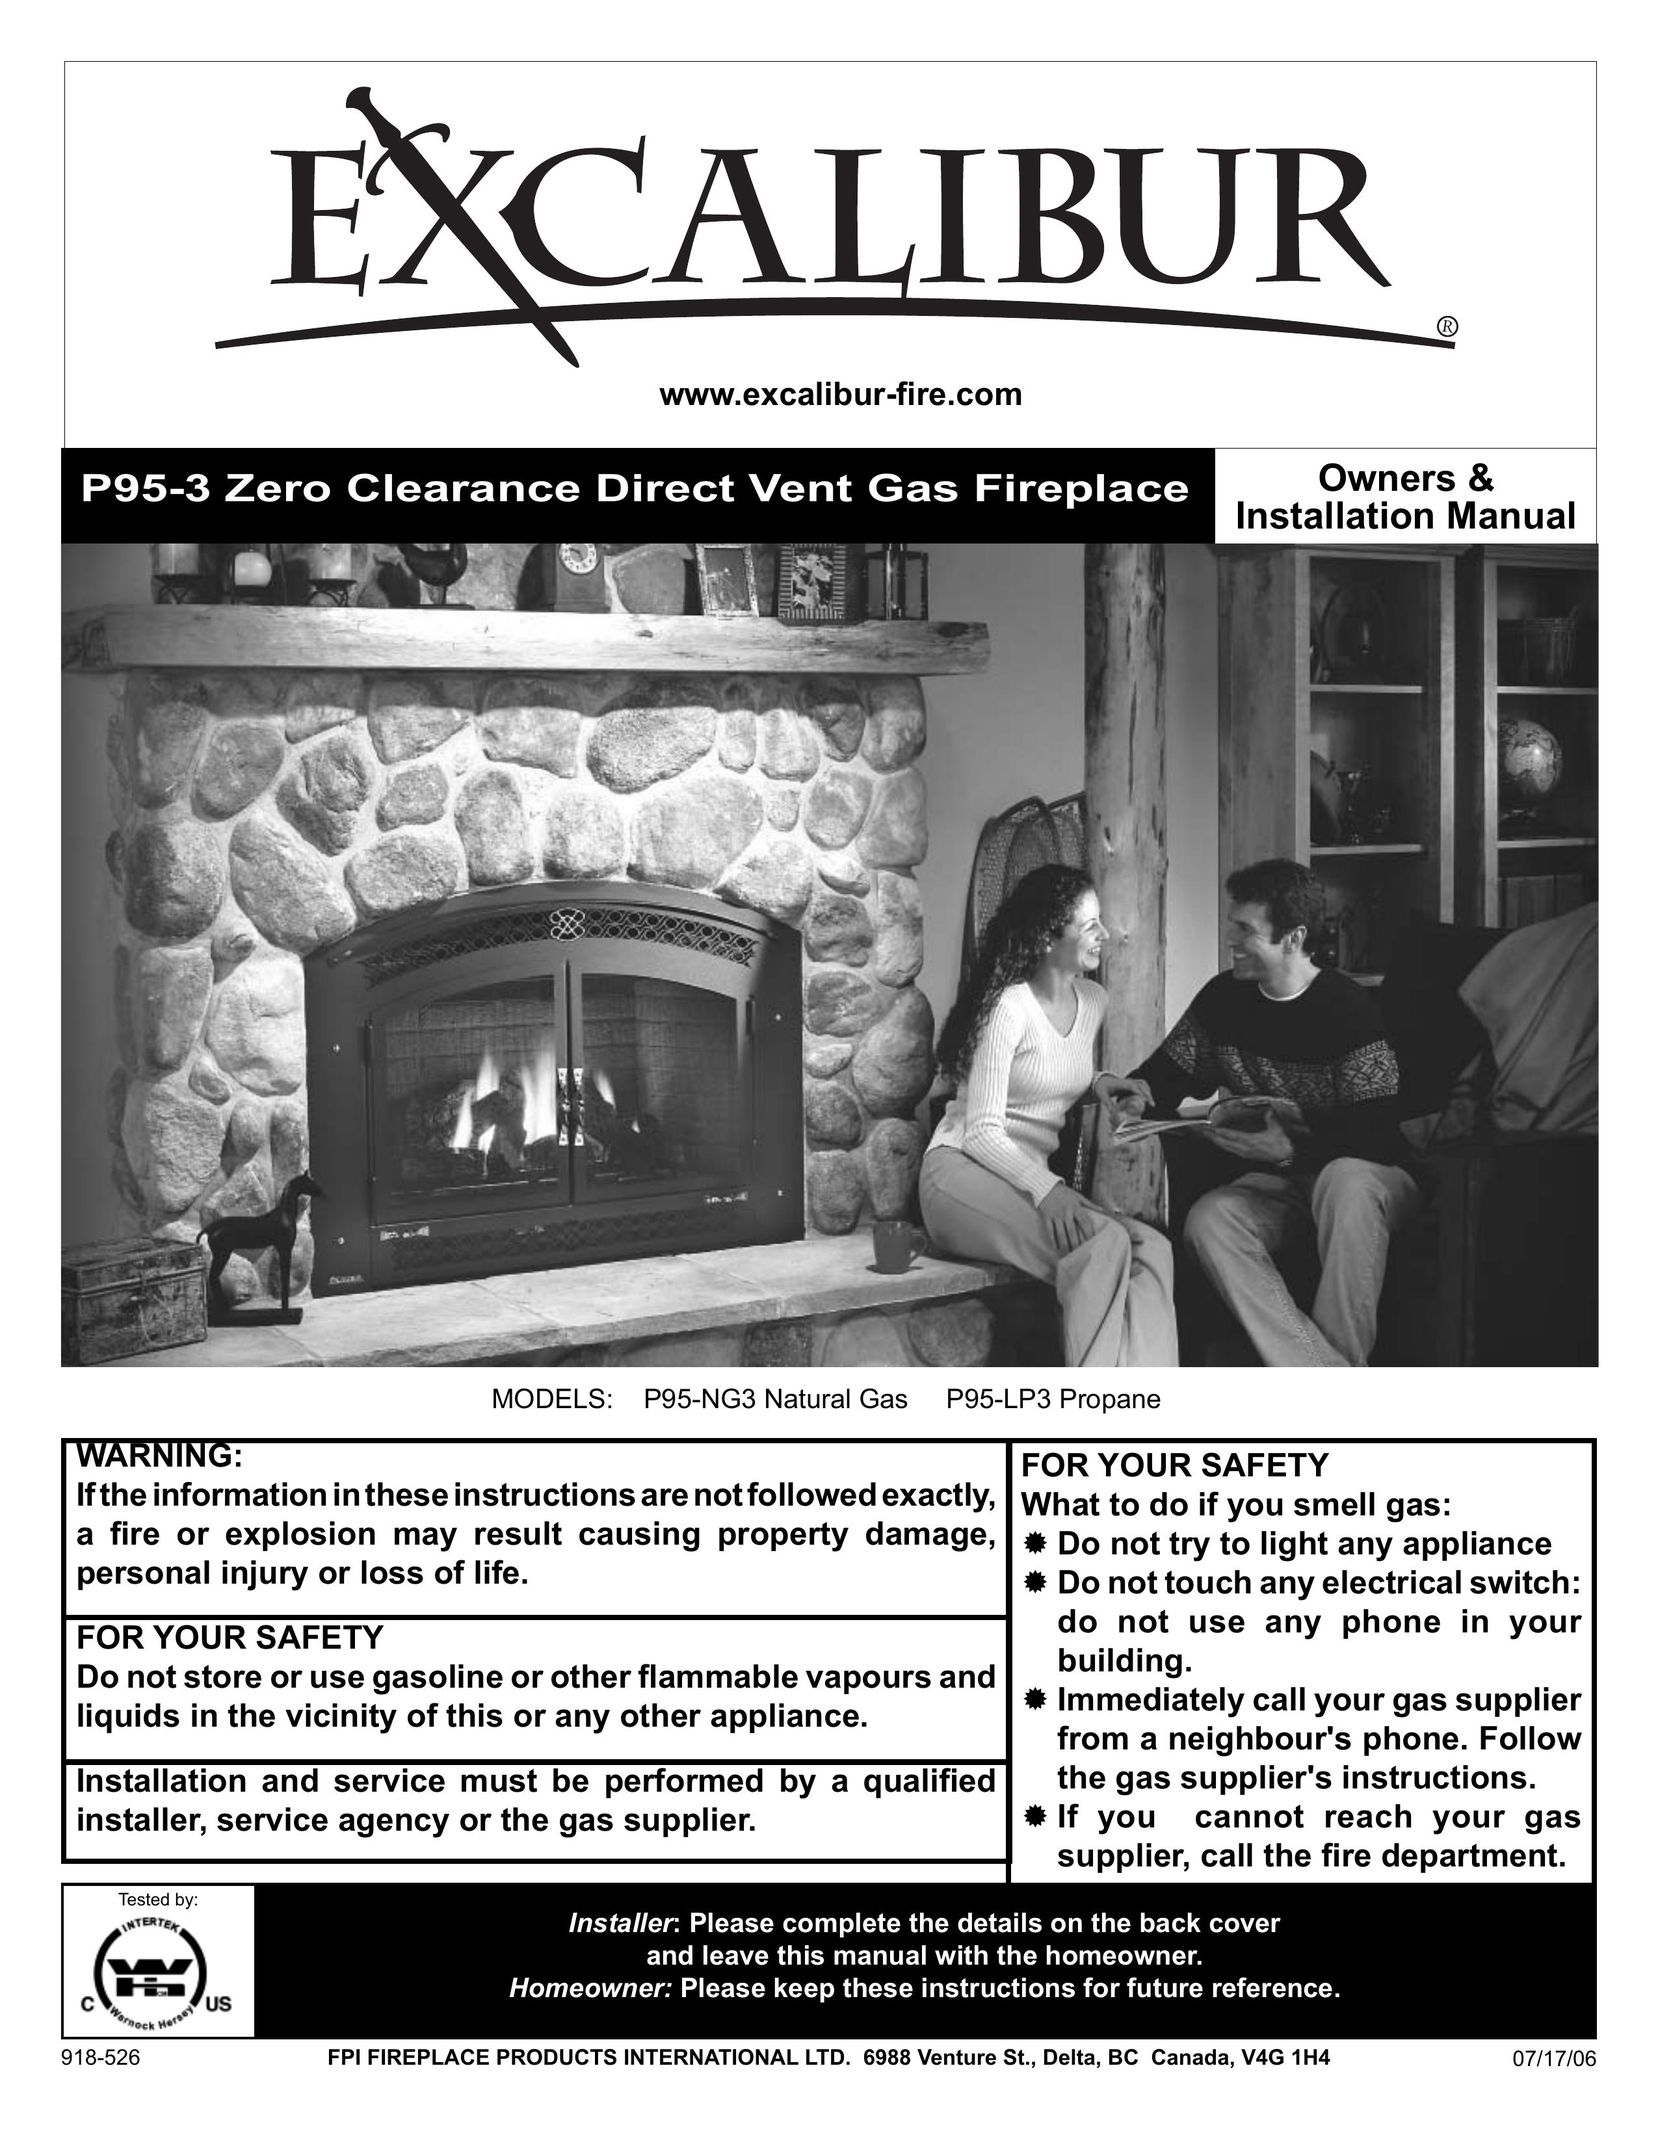 Excalibur electronic P95-LP3 Indoor Fireplace User Manual